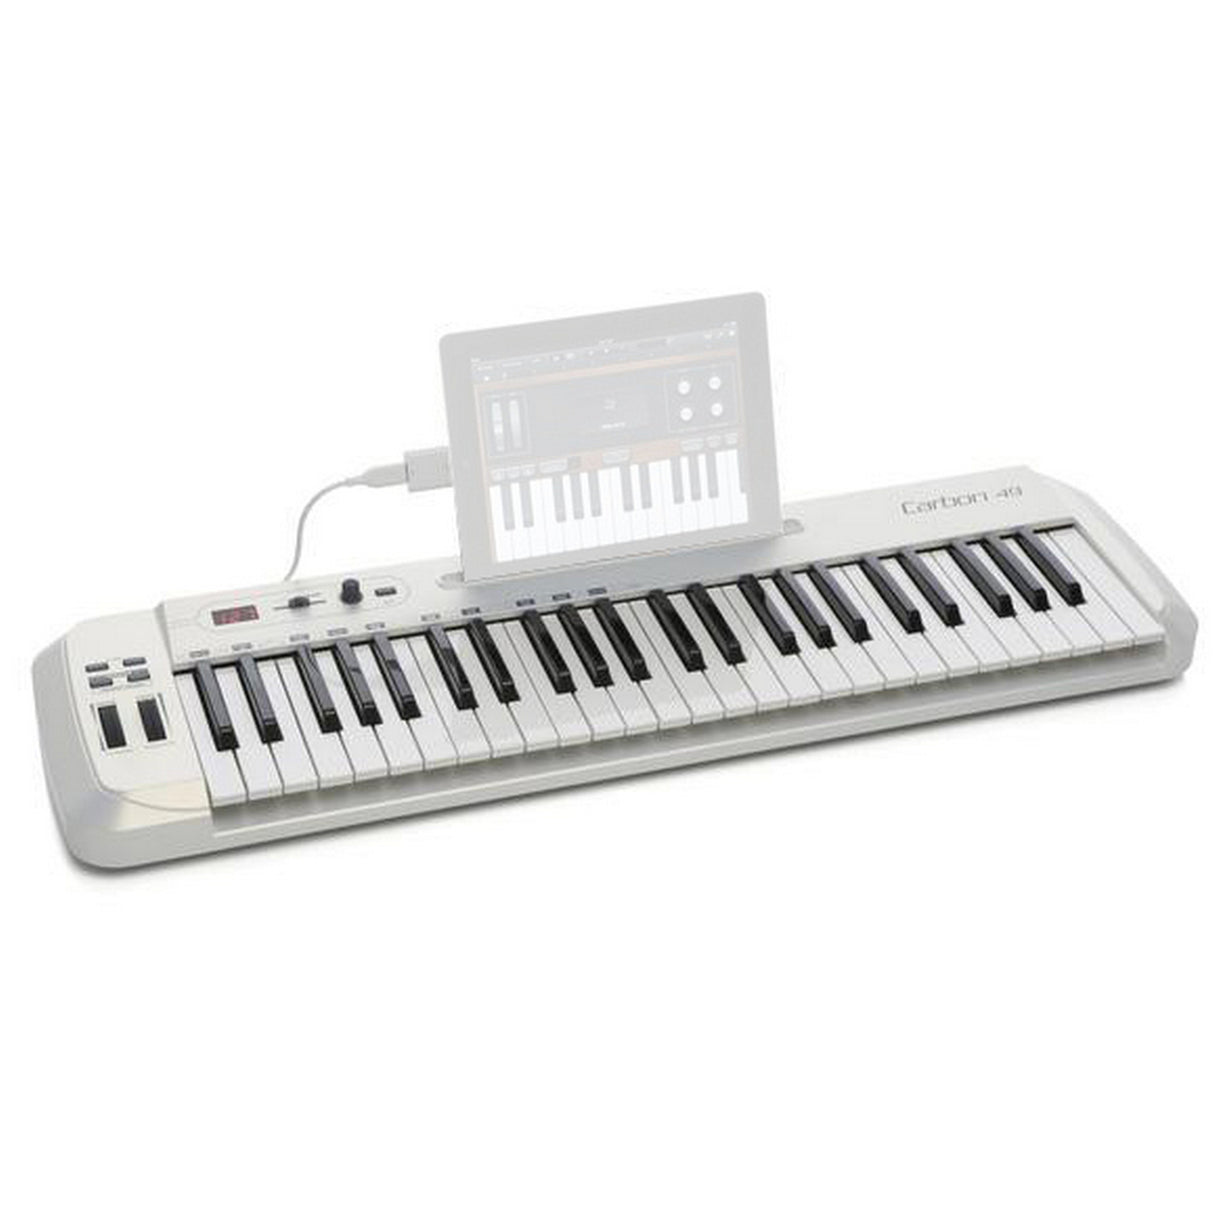 Samson Carbon 49 | 49 Keyboard USB MIDI Controller